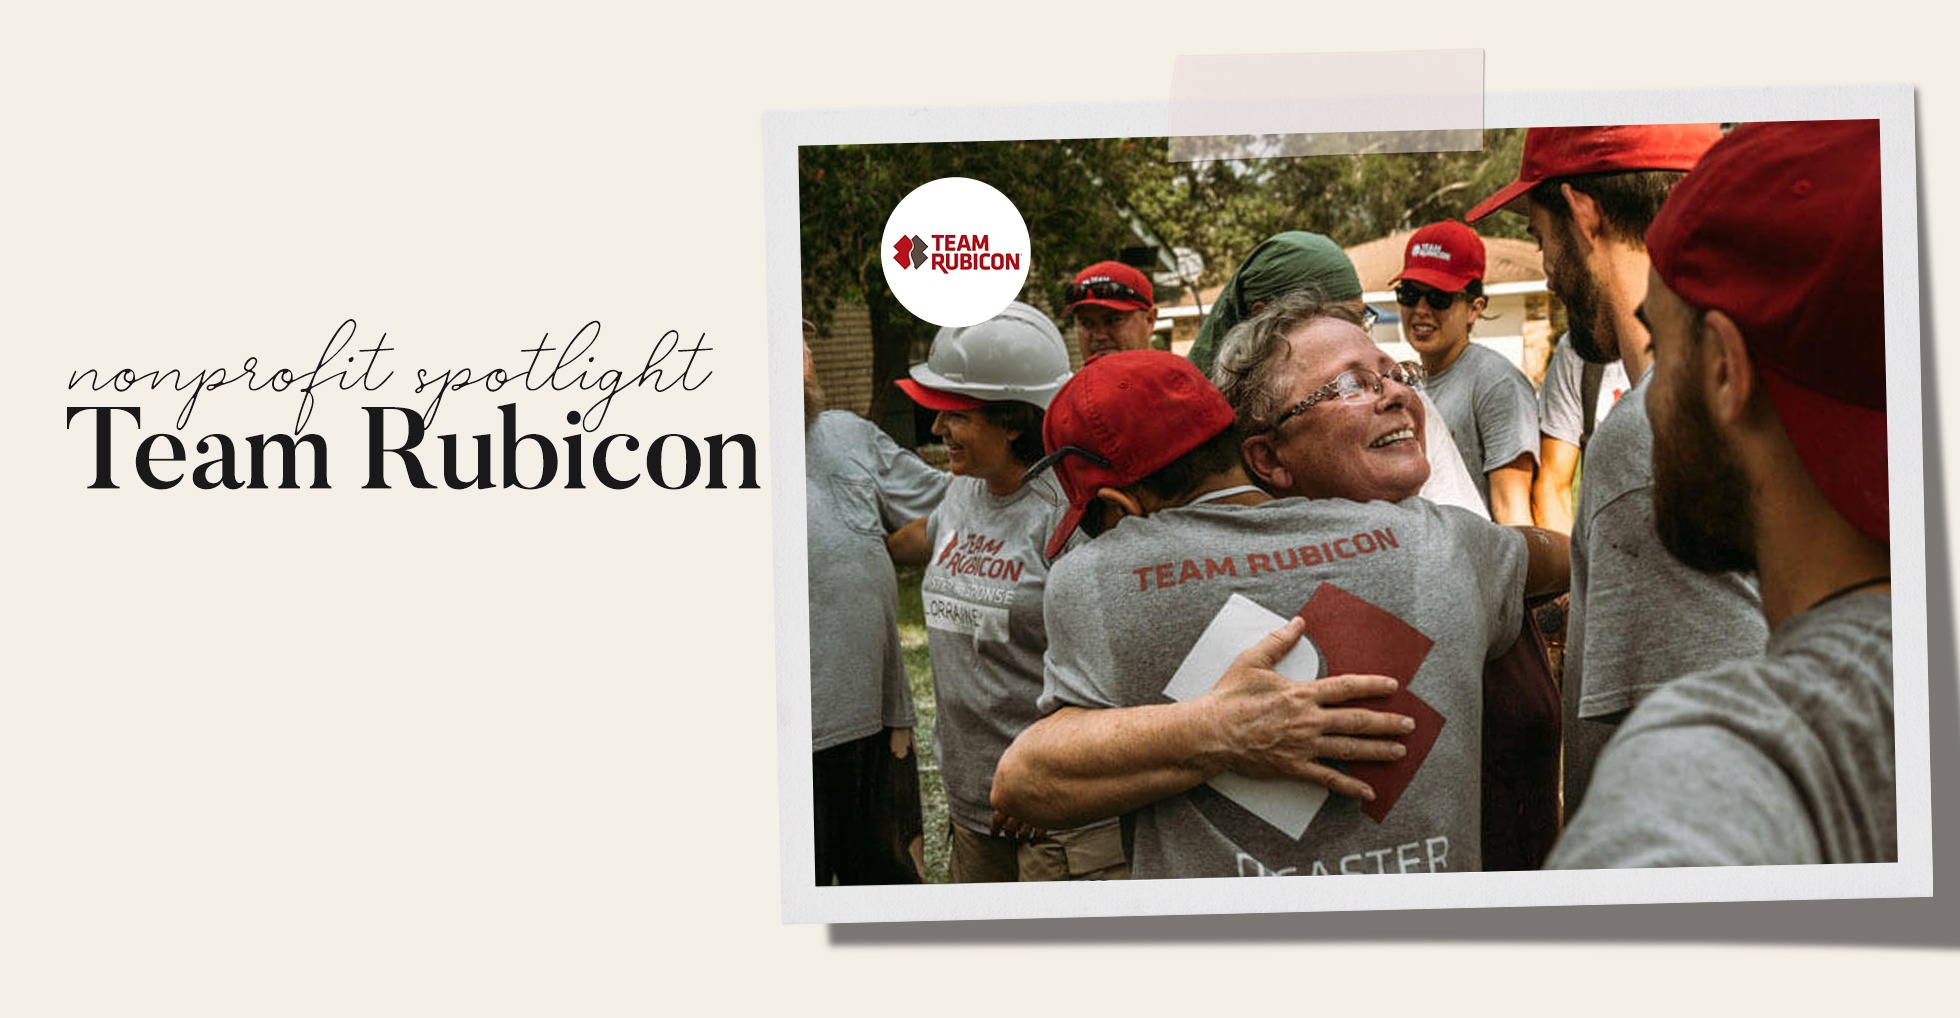 Team Rubicon Global: Nonprofit Spotlight